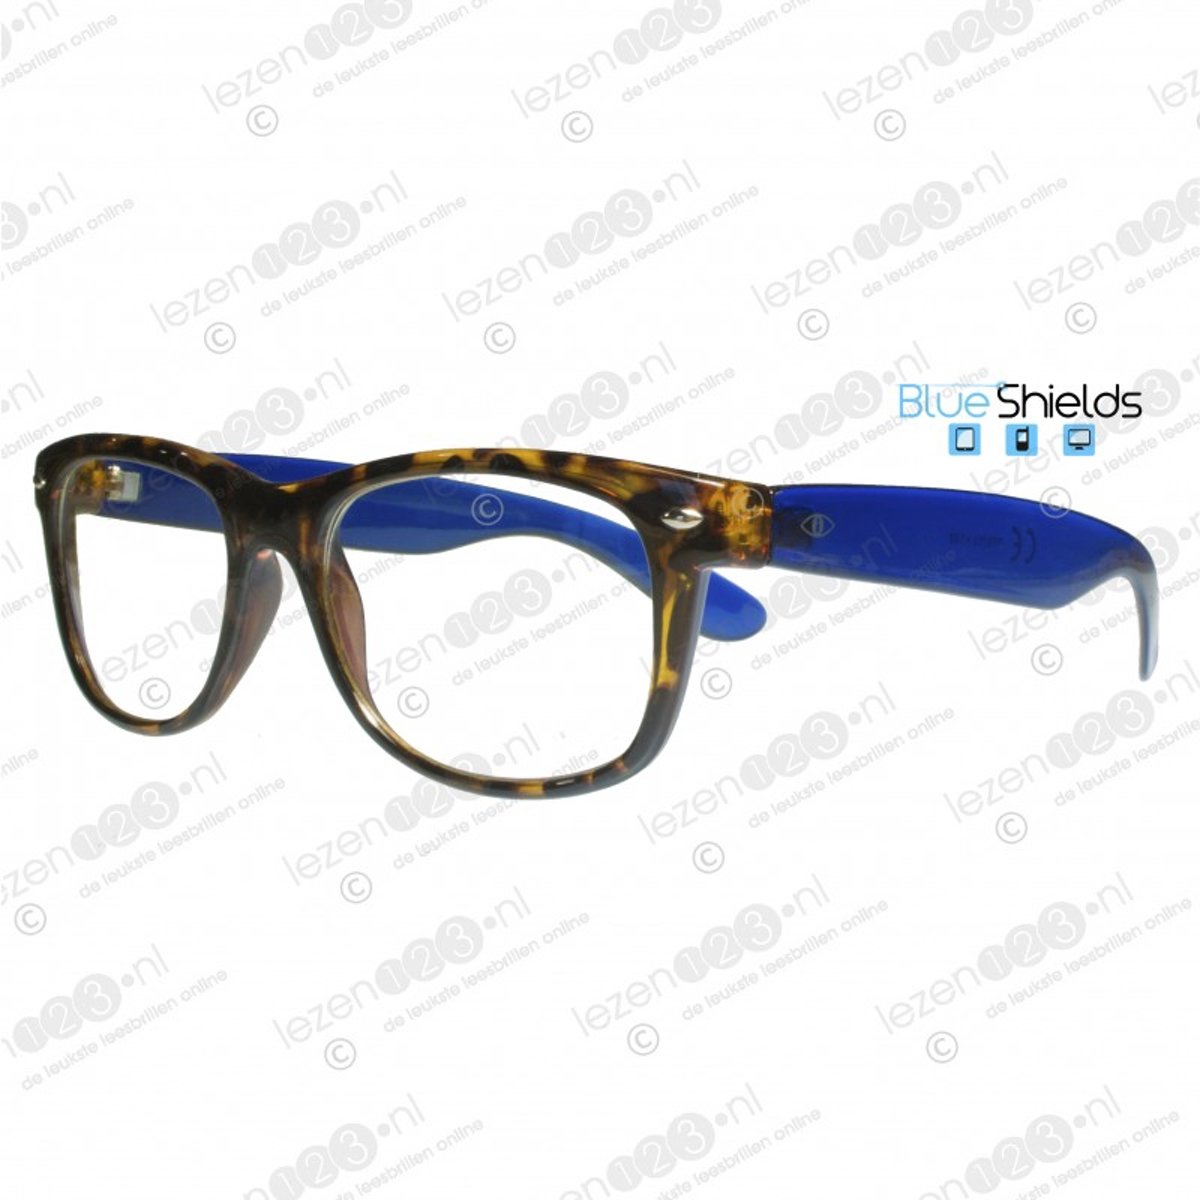 Foto van Icon Eyewear RFE013 +1.00 WayeFarer BlueShields bril - blauw licht filter lens - Tortoise montuur, blauwe poten